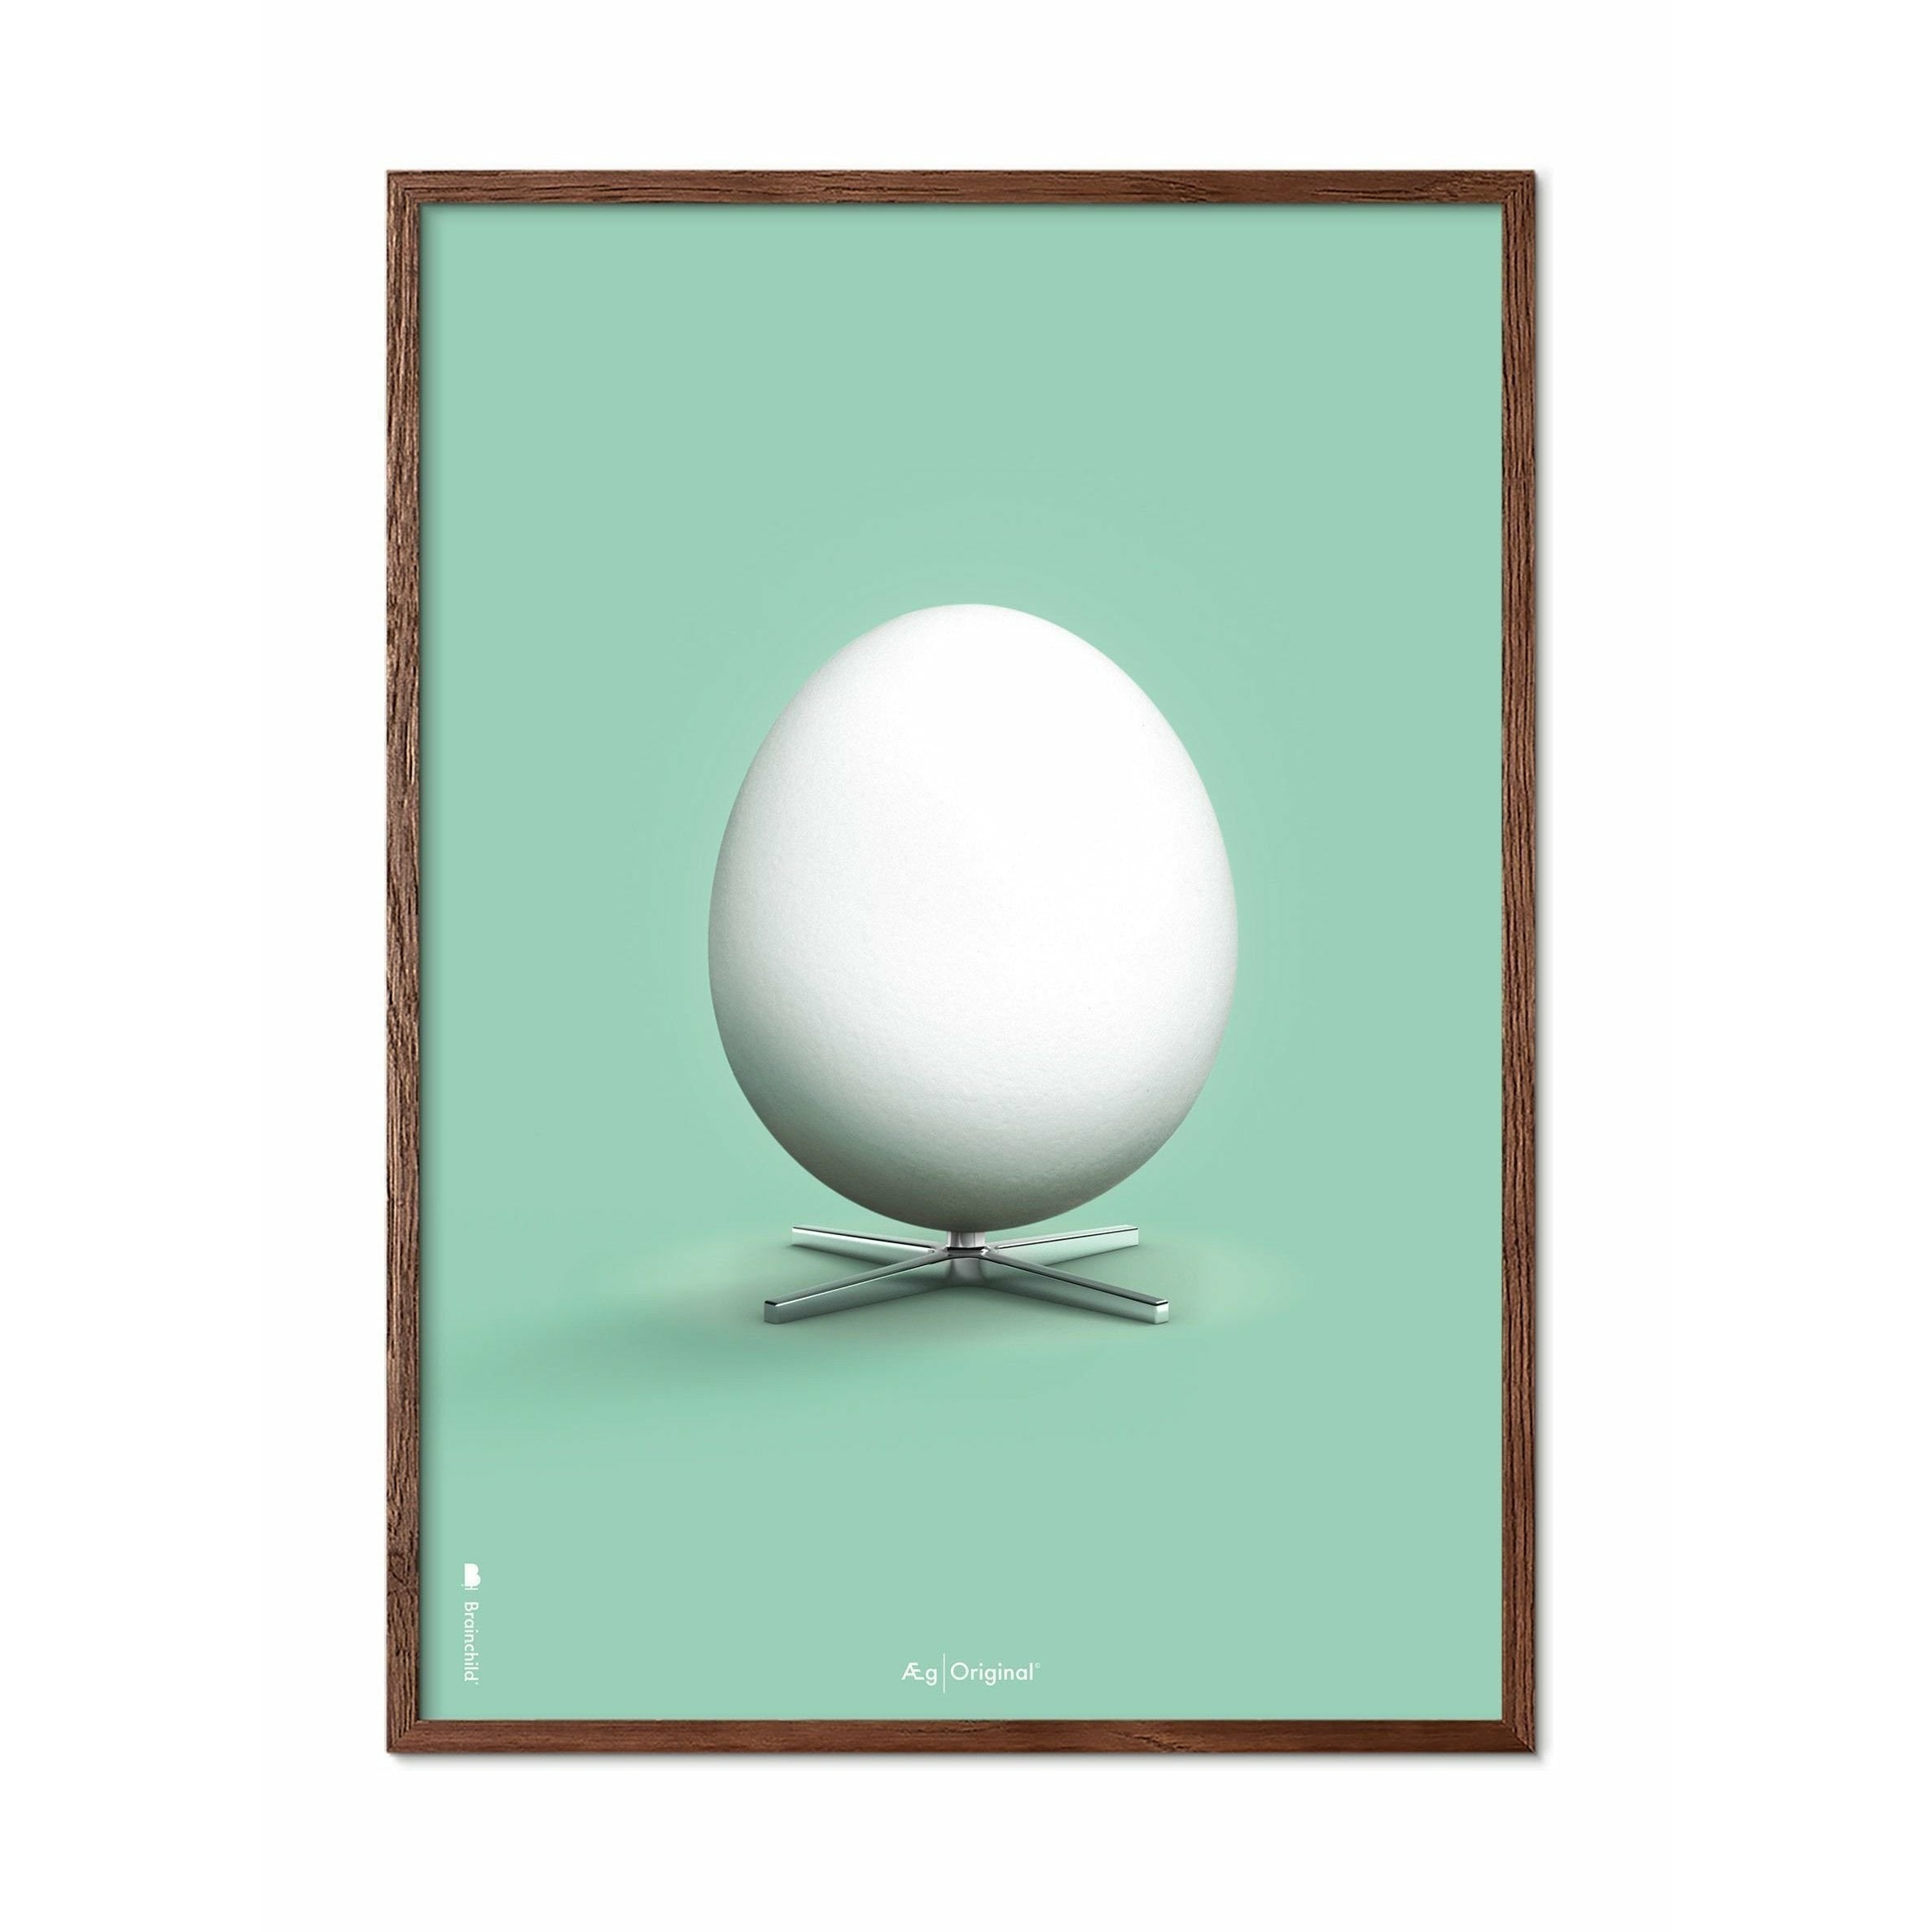 Brainchild Egg Classic Affisch, ram i mörkt trä 70x100 cm, mintgrön bakgrund